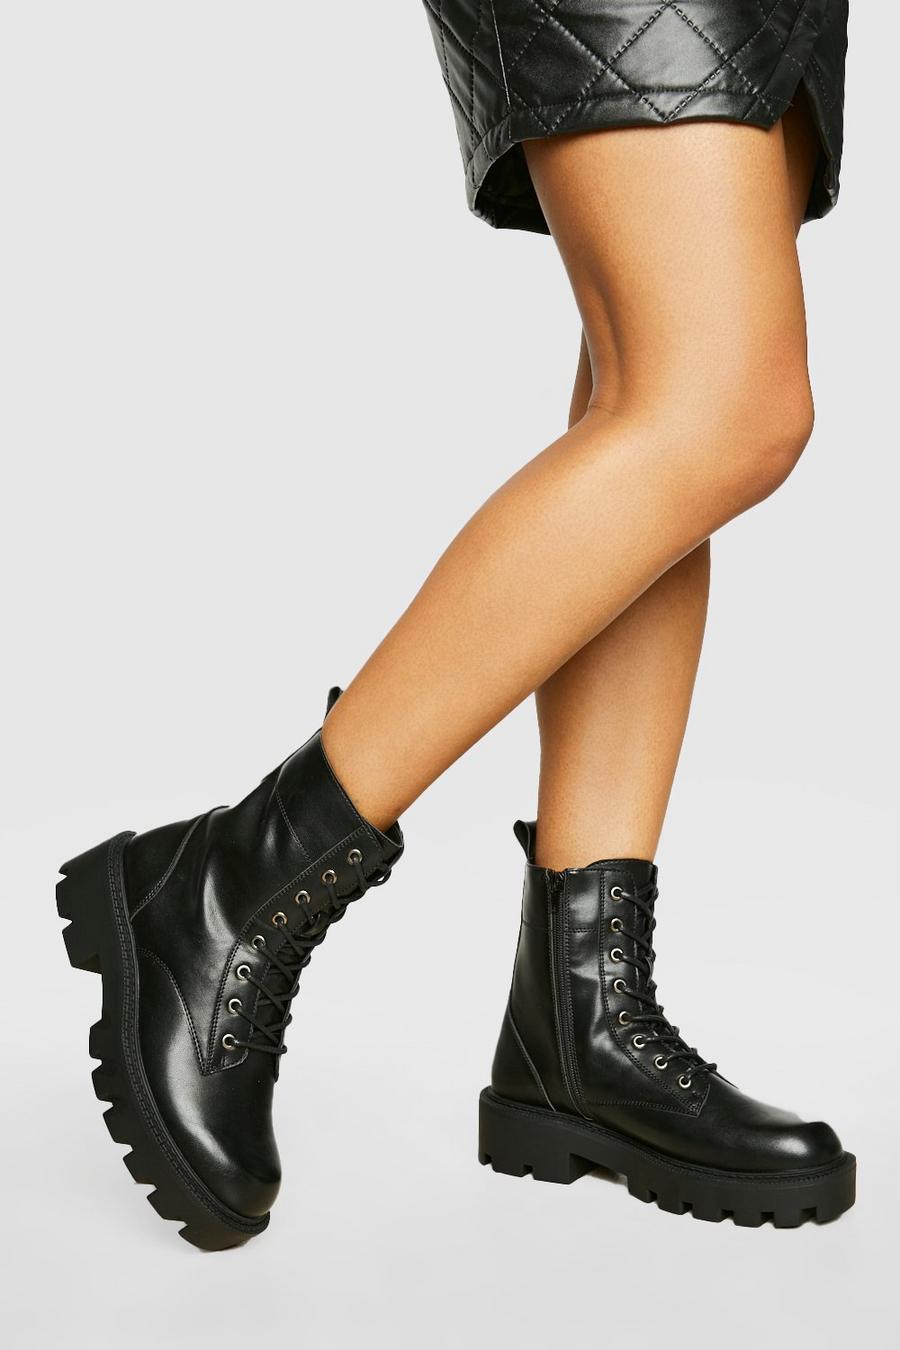 Black Chunky Heeled Combat Boots